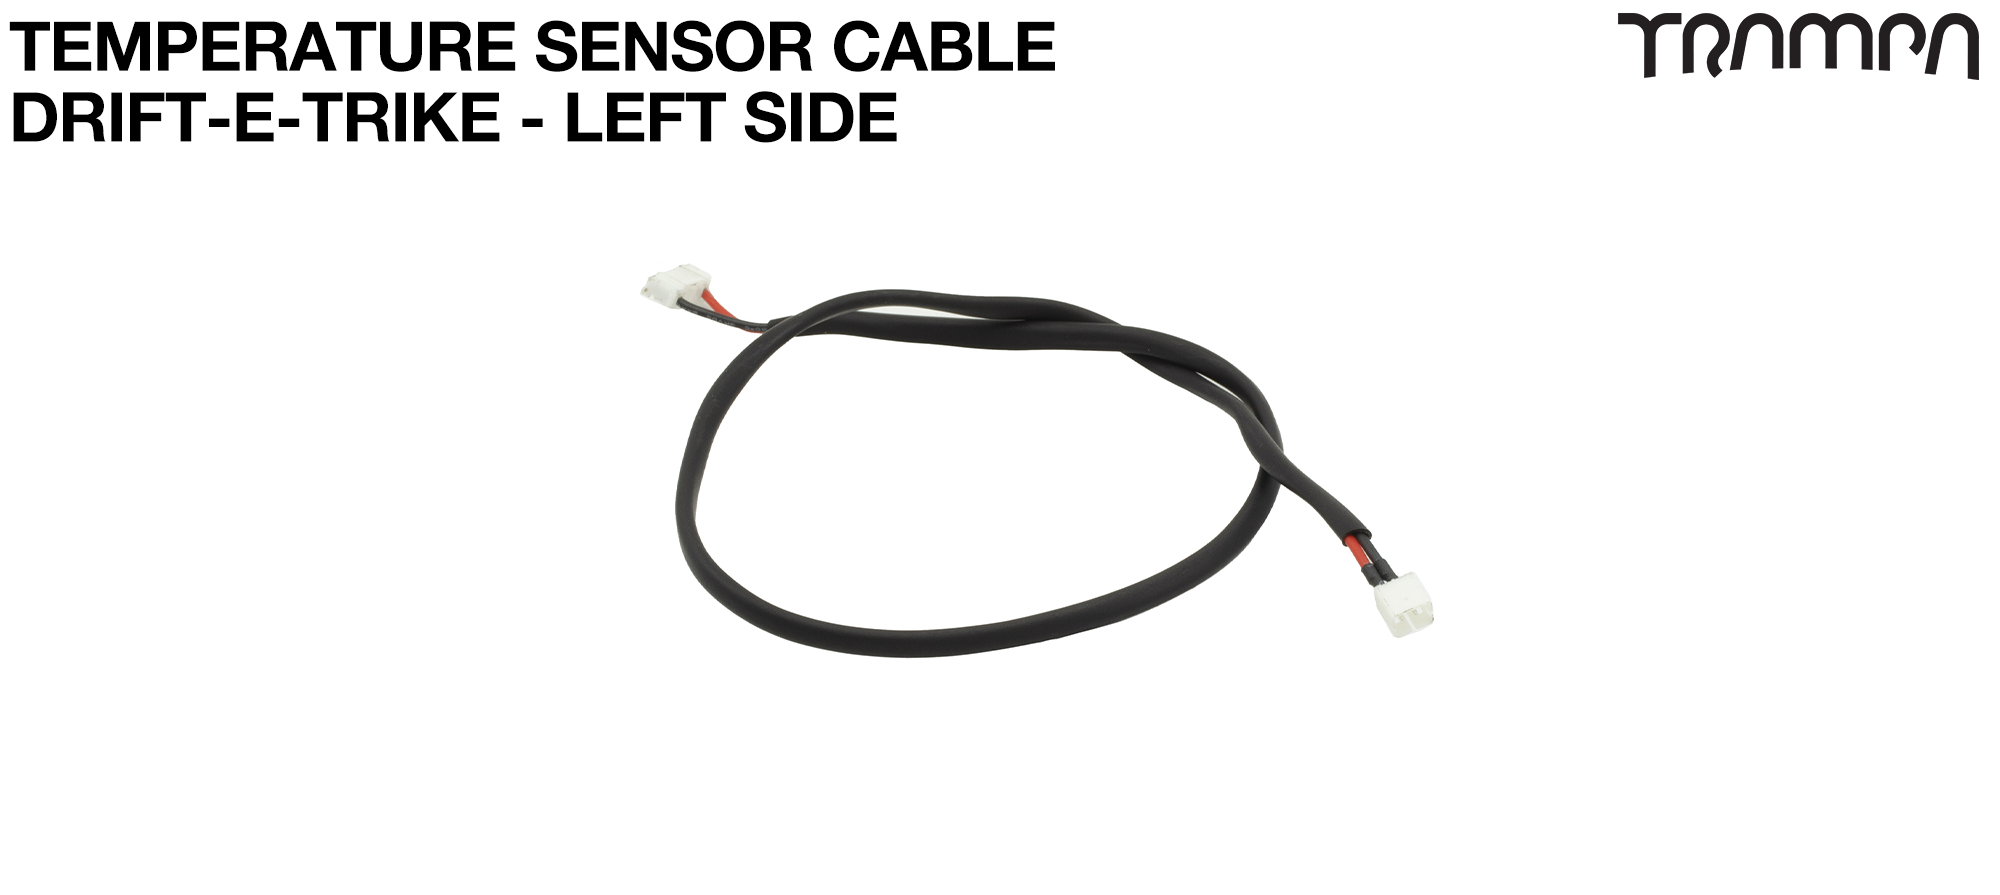 TEMP Sensor Cable DRIFT-E-TRIKE - LEFT Side 690mm 